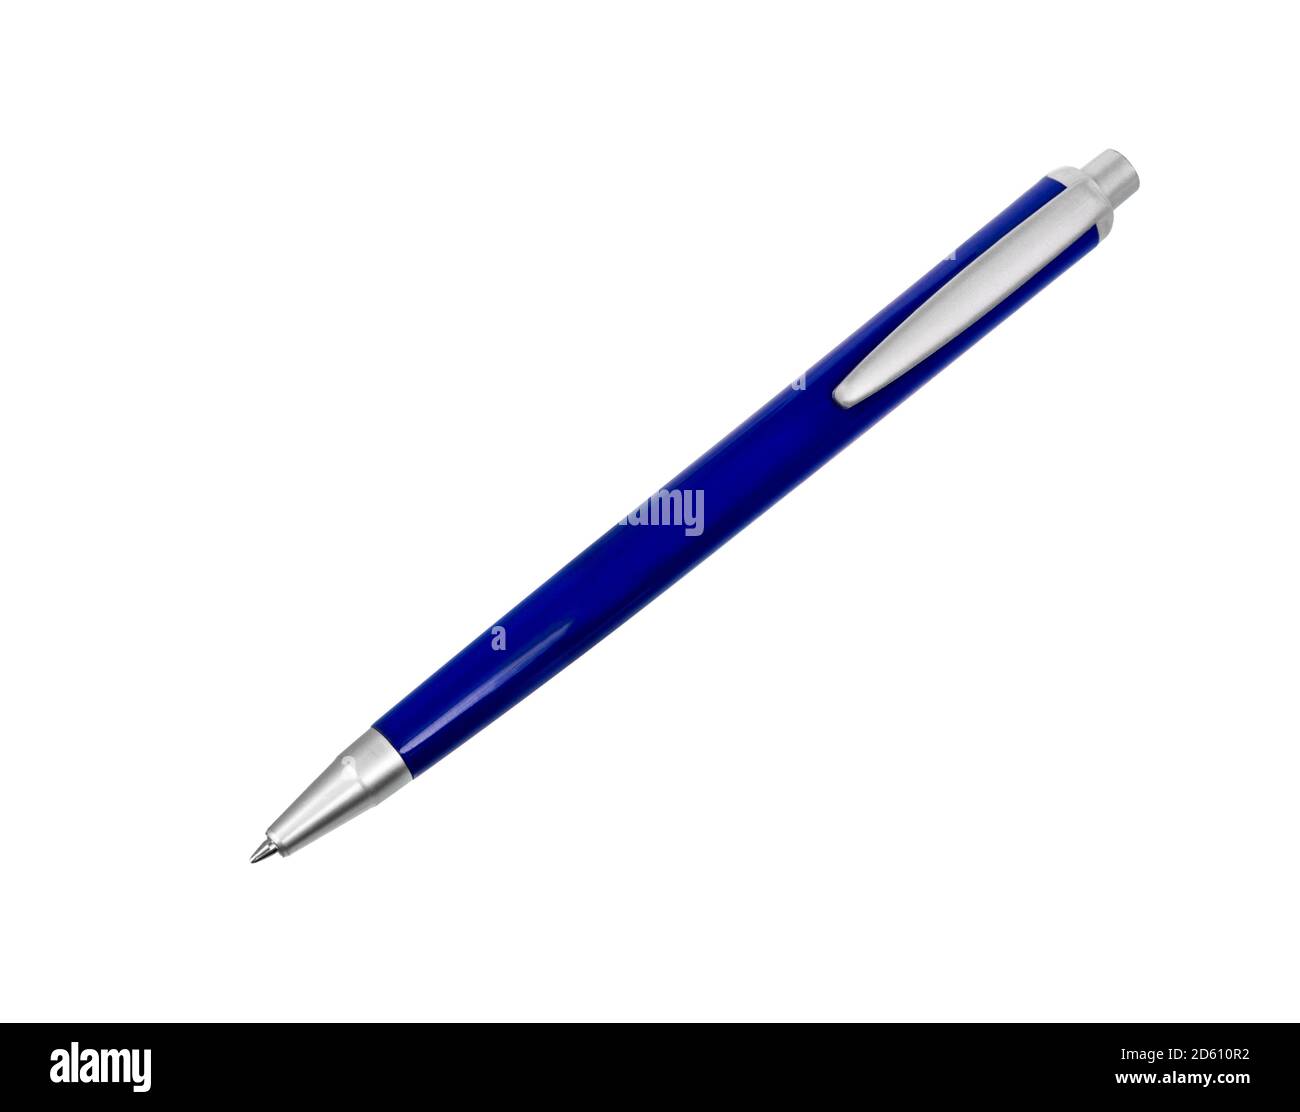 Bolígrafo metálico aislado sobre fondo blanco. Bolígrafo azul cortado.  Bolígrafo de biro desechable metálico Fotografía de stock - Alamy